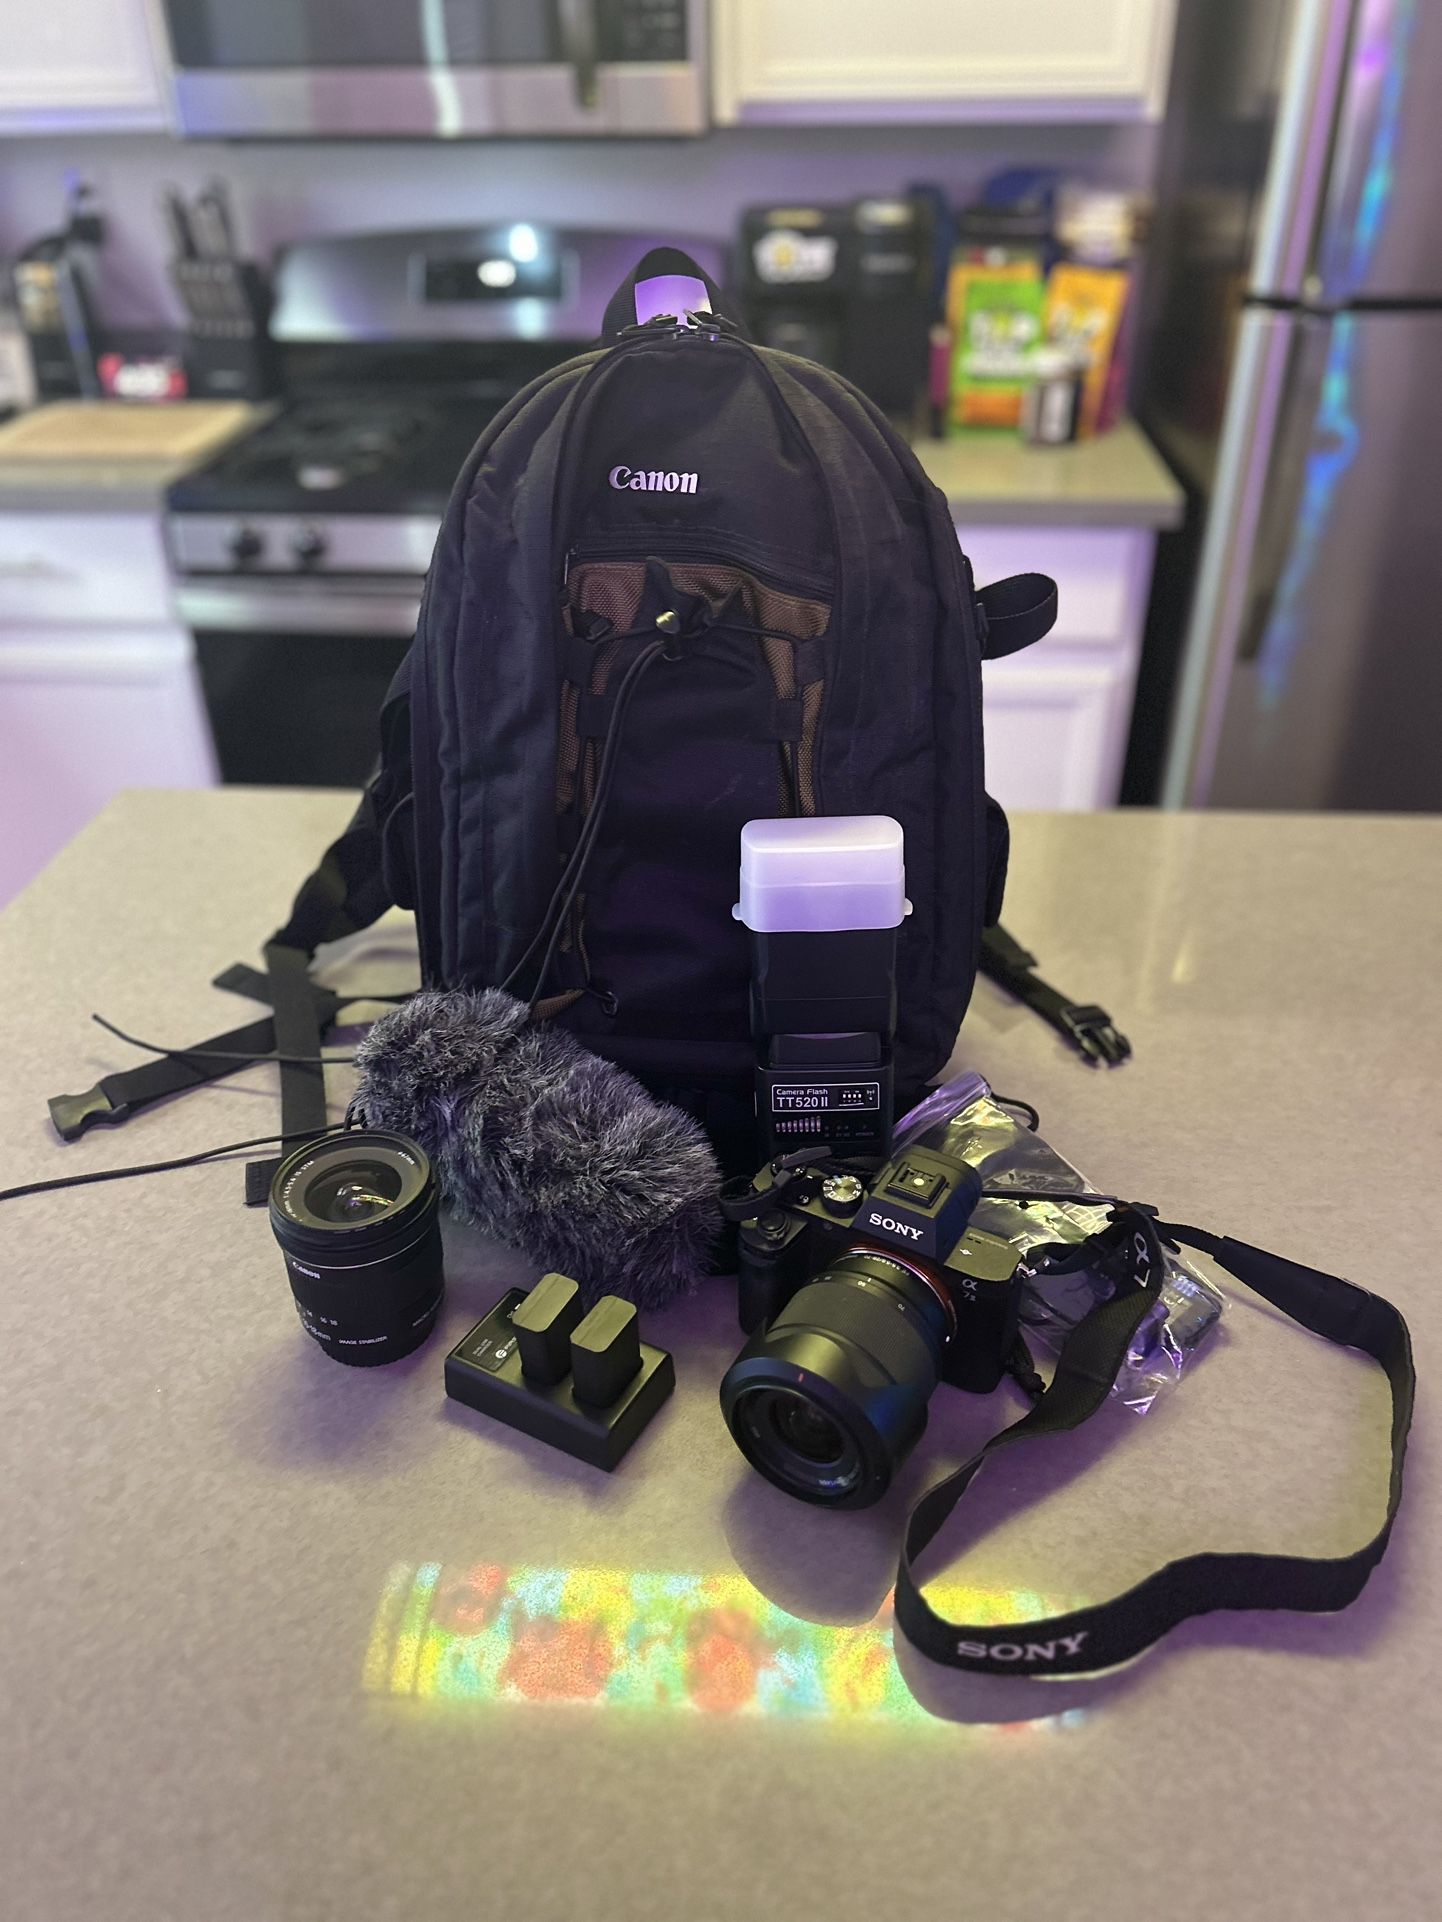 Full Camera Setup (Full Bundle or Selling Separately)